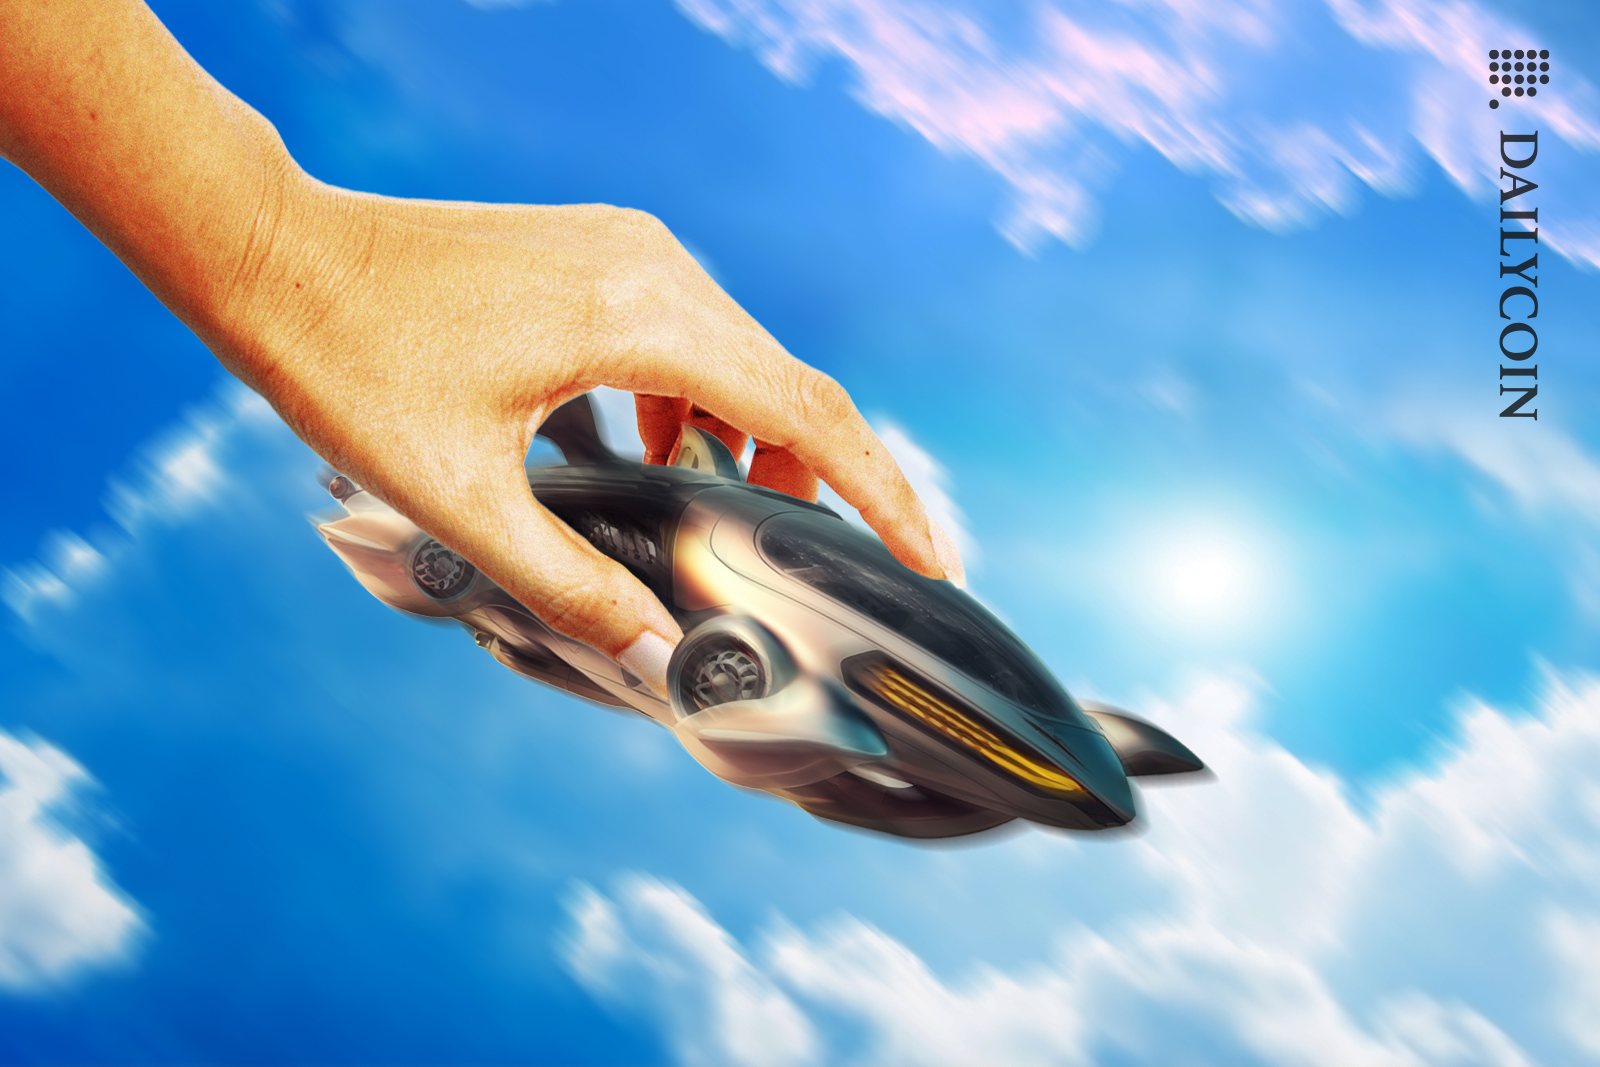 Big hand controlling futuristic spaceship toy through the sky.